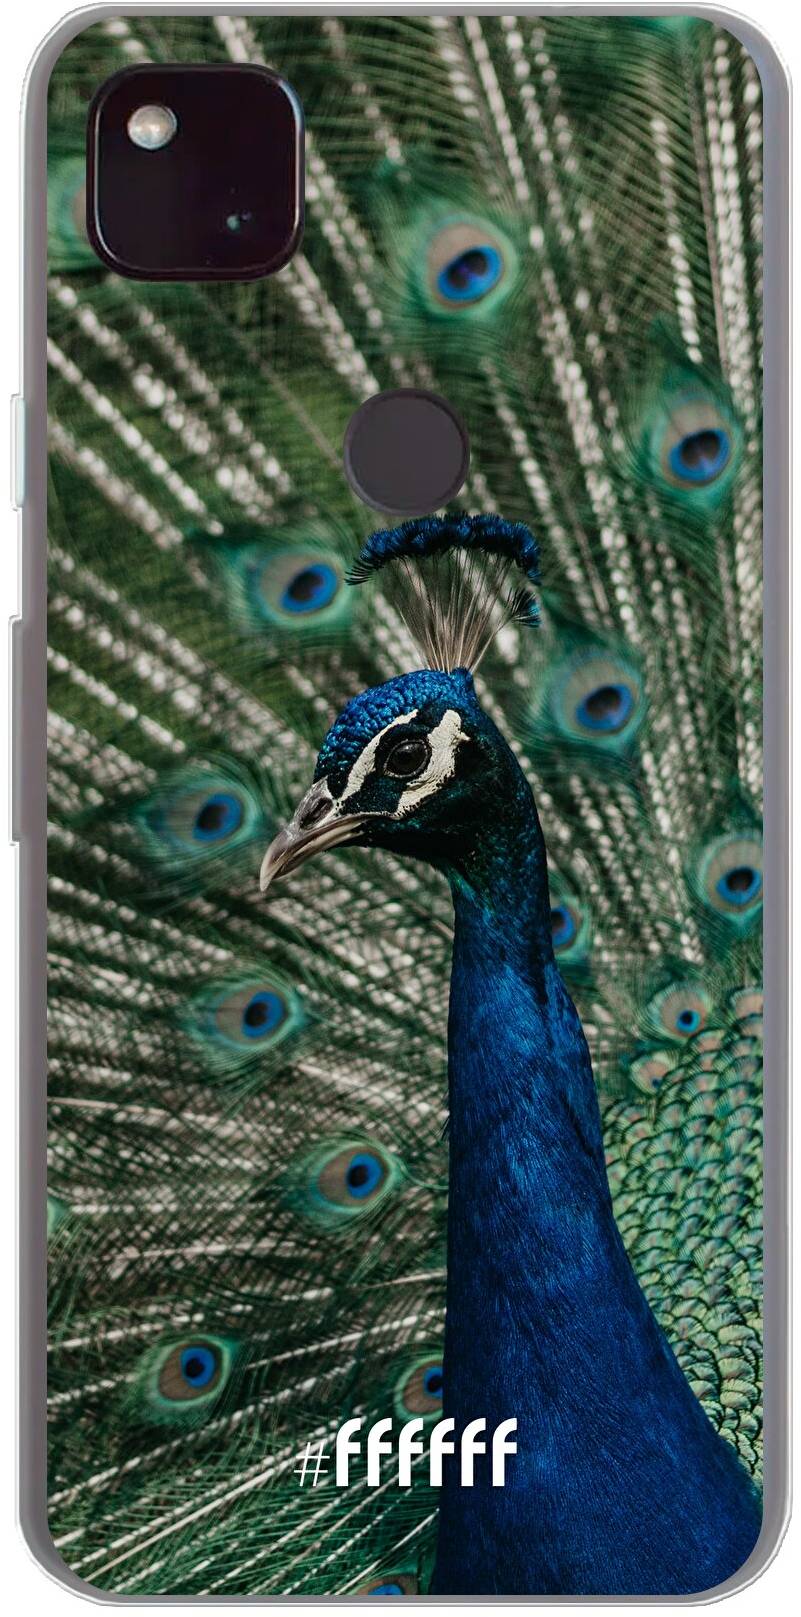 Peacock Pixel 4a 5G